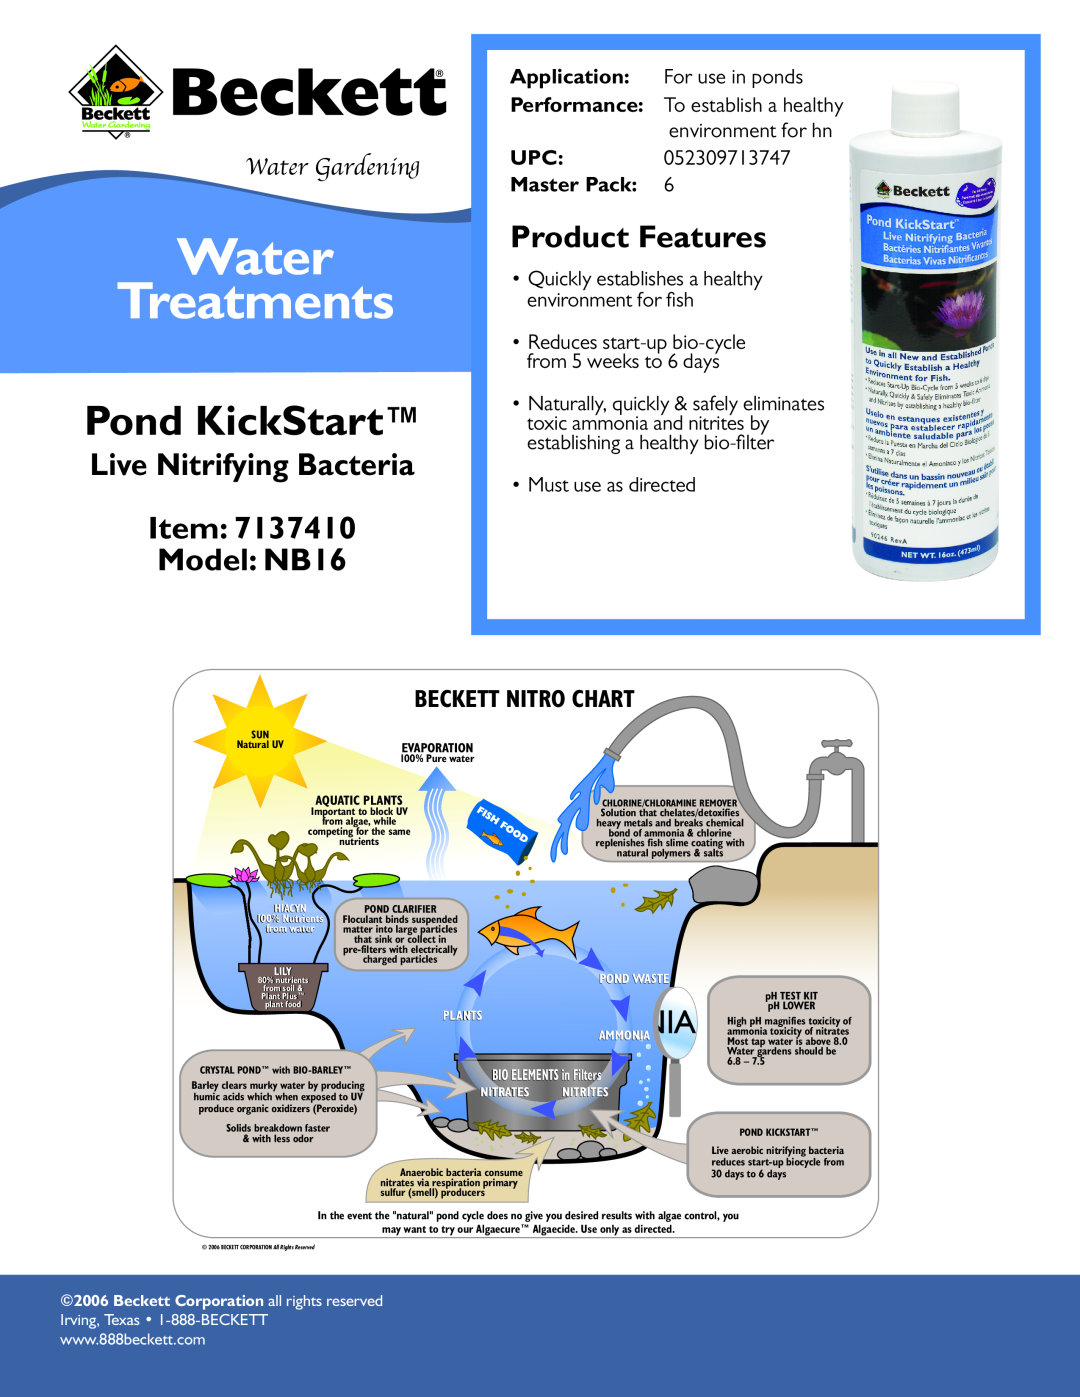 Beckett Water Gardening specifications Water Treatments, Pond KickStart, Live Nitrifying Bacteria Item Model NB16, Upc 